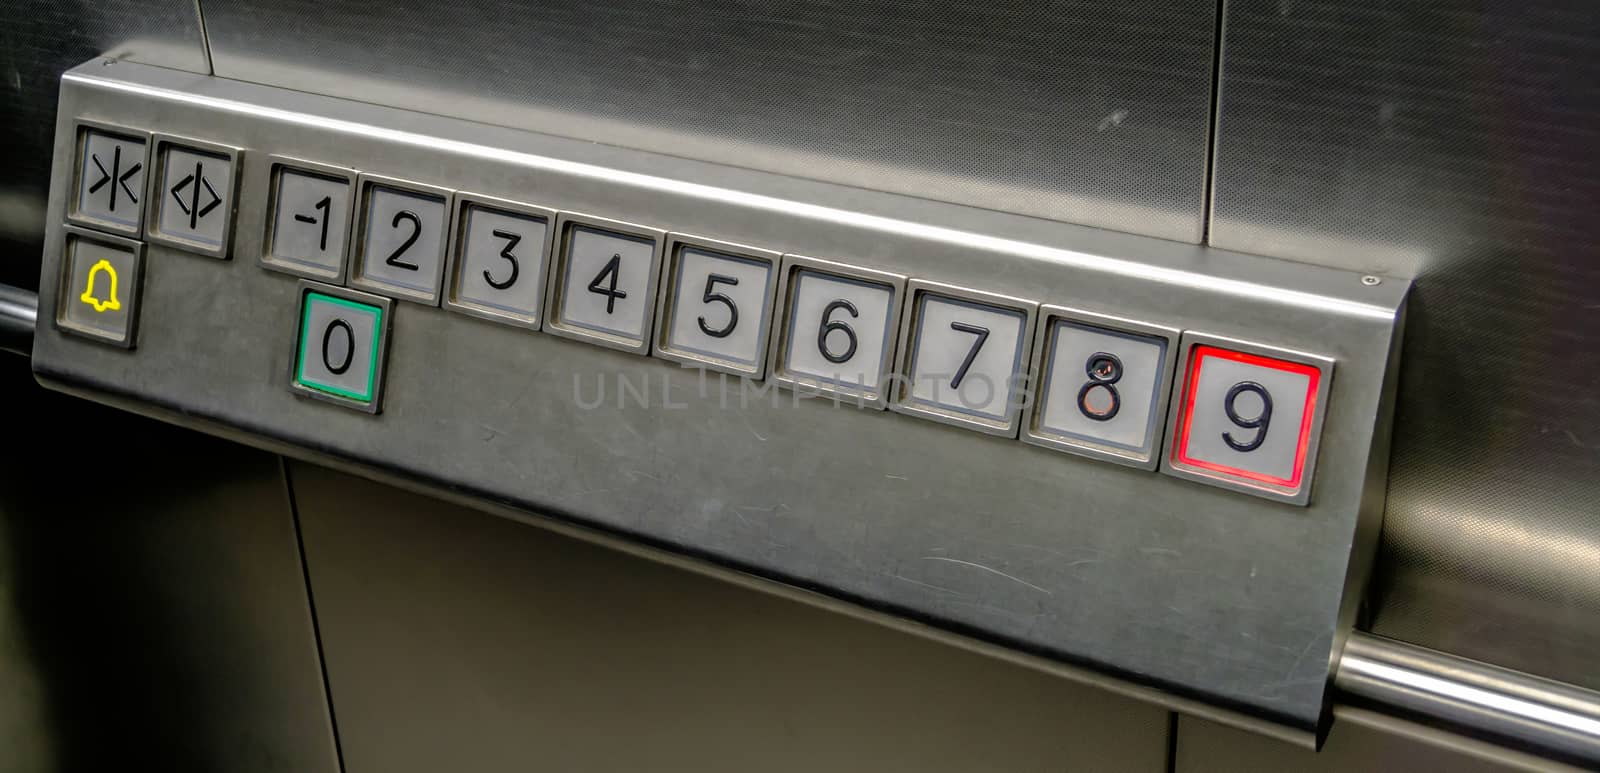 Display for floors up to floor nine in an elevator